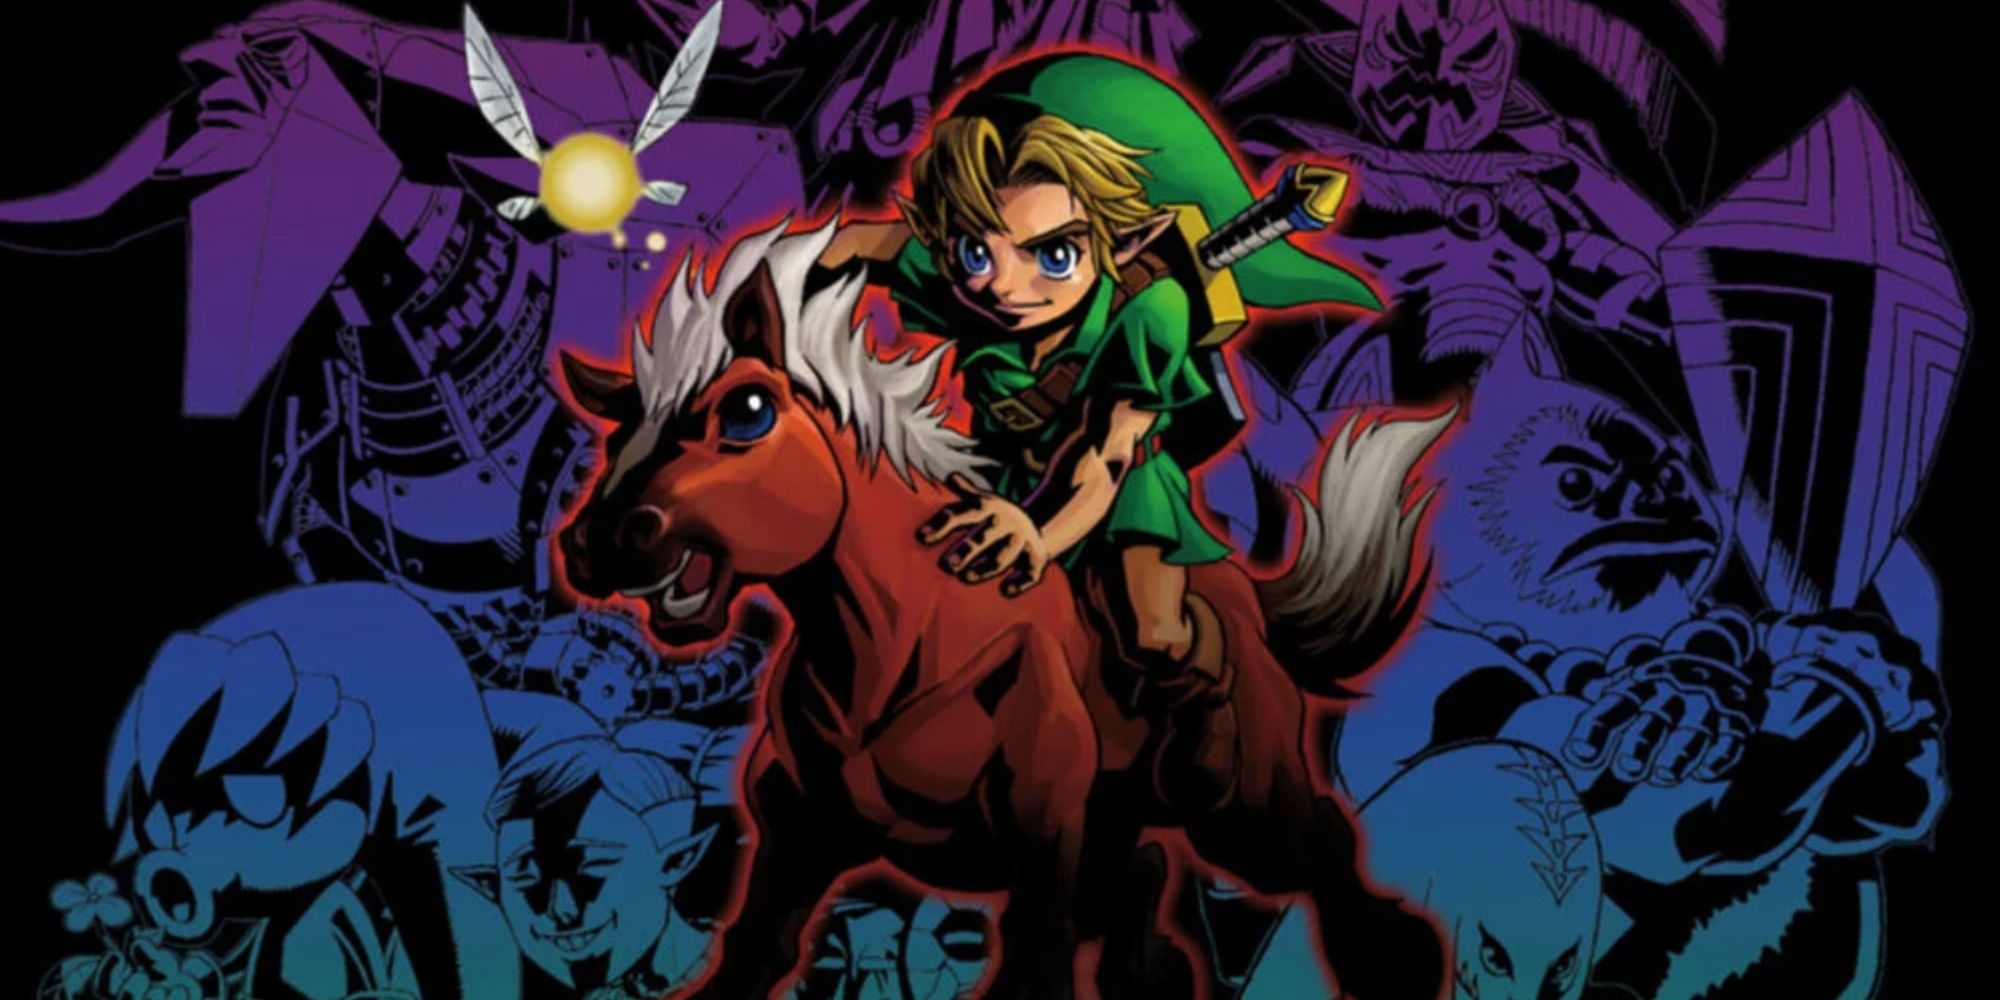 The Box Art for The Legend of Zelda: Majora's Mask